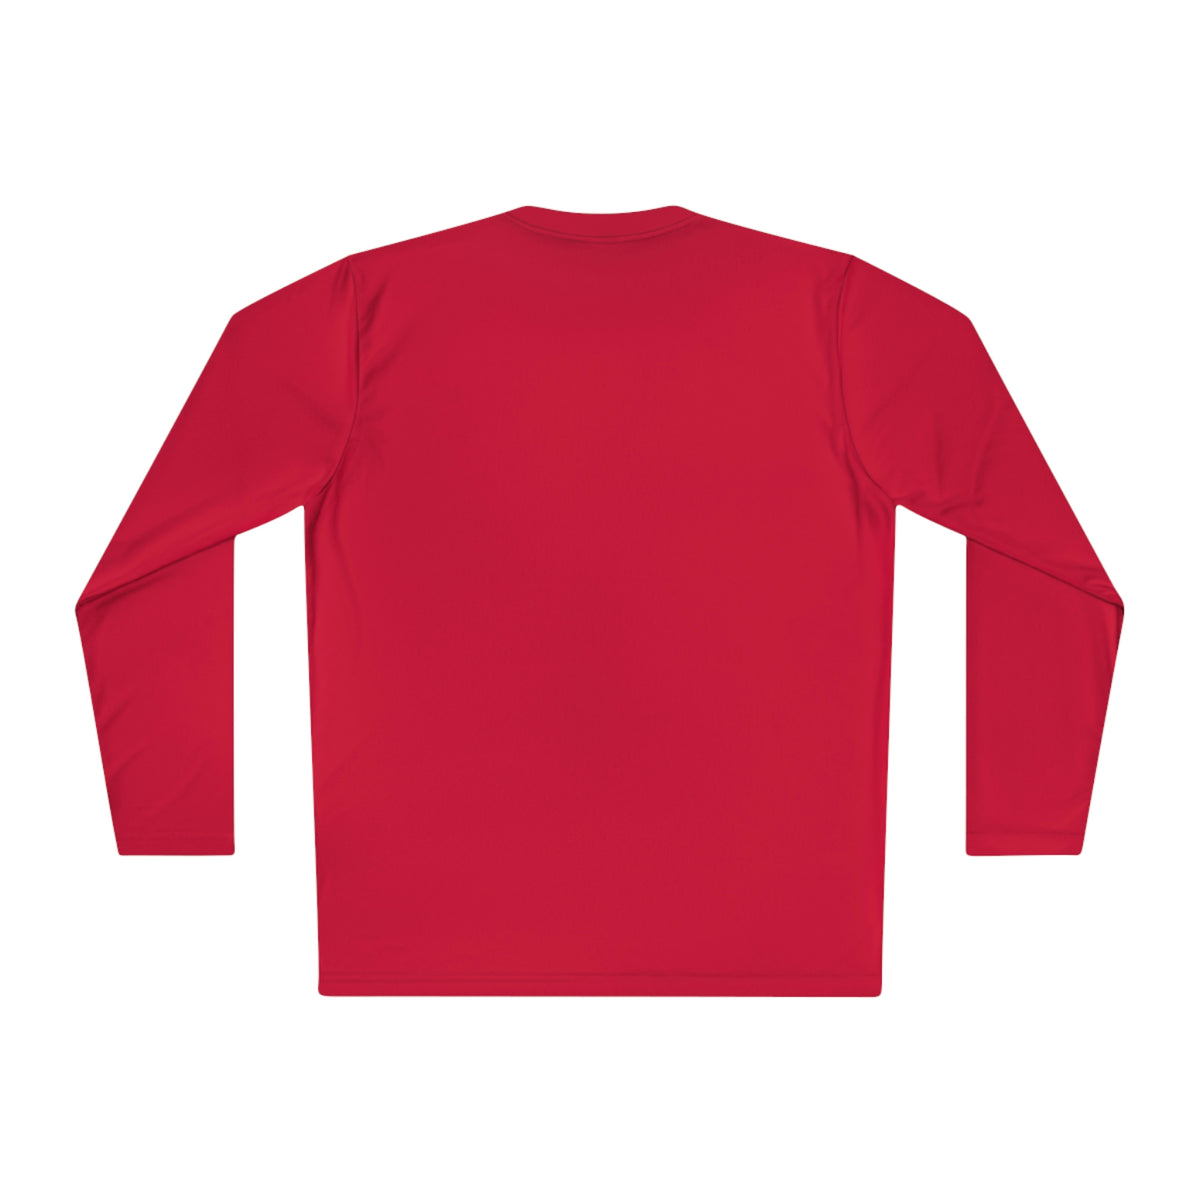 Les Millions d'Arlequin (Red) - Unisex Lightweight Long Sleeve Tee